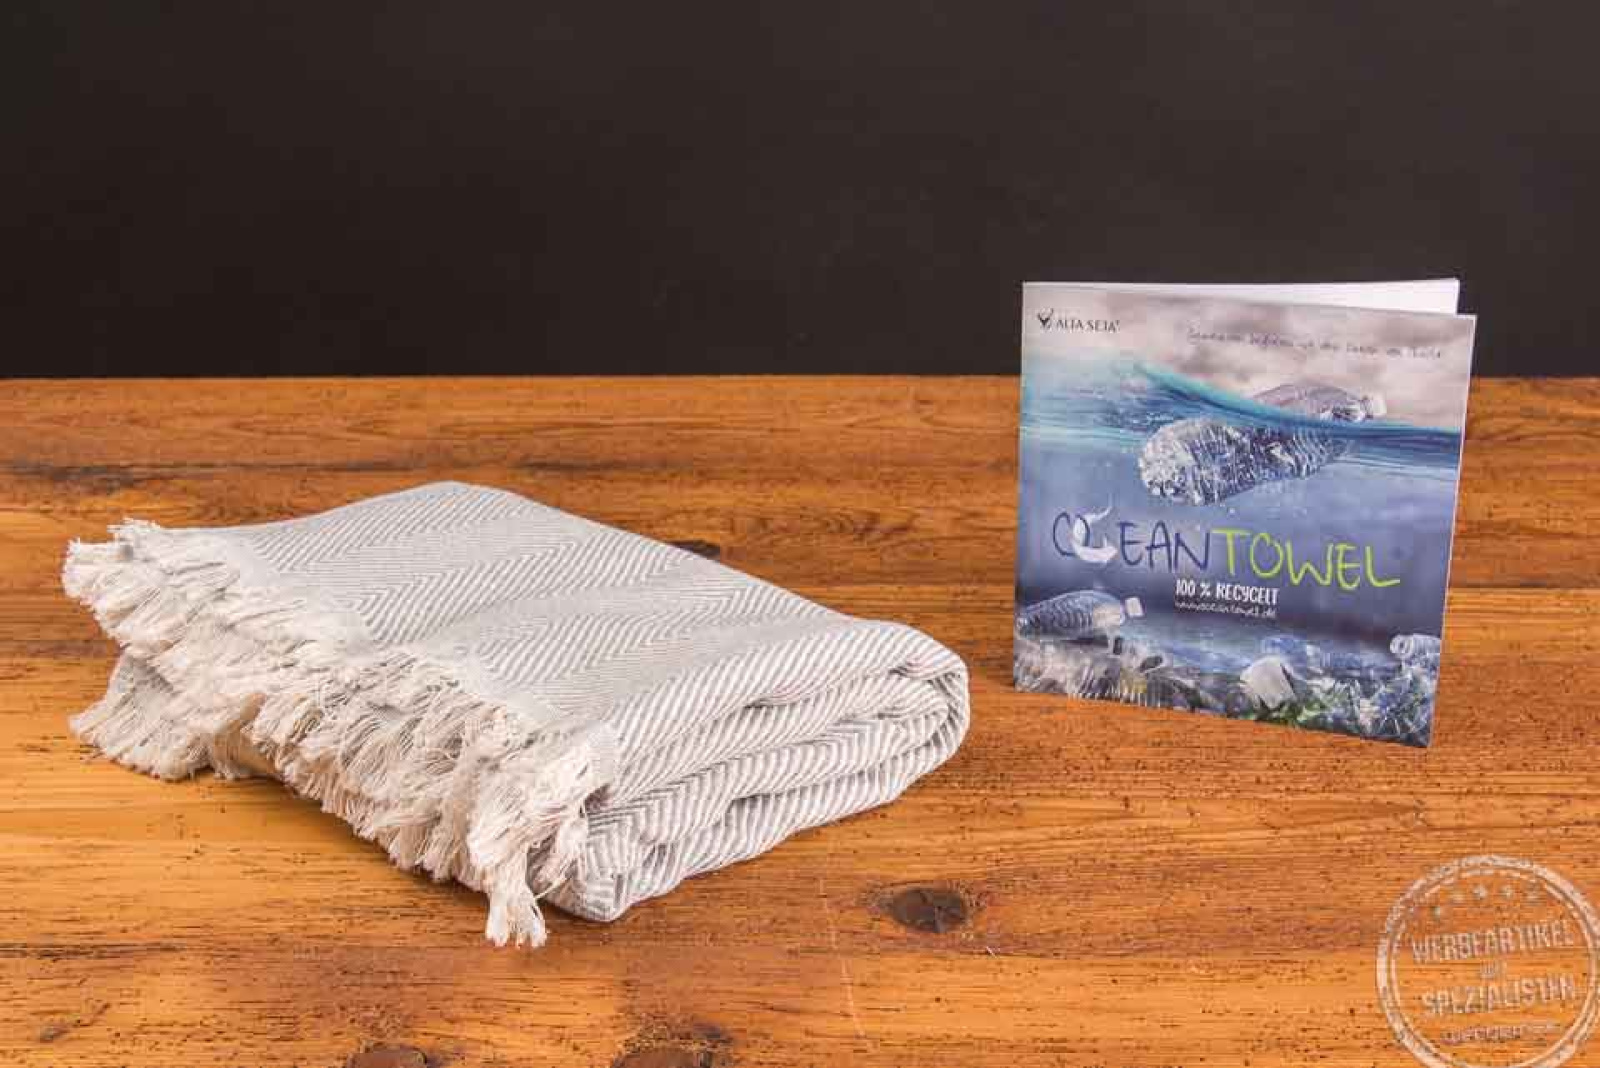 Alta Seta Ocean Towel mit Werbeflyer